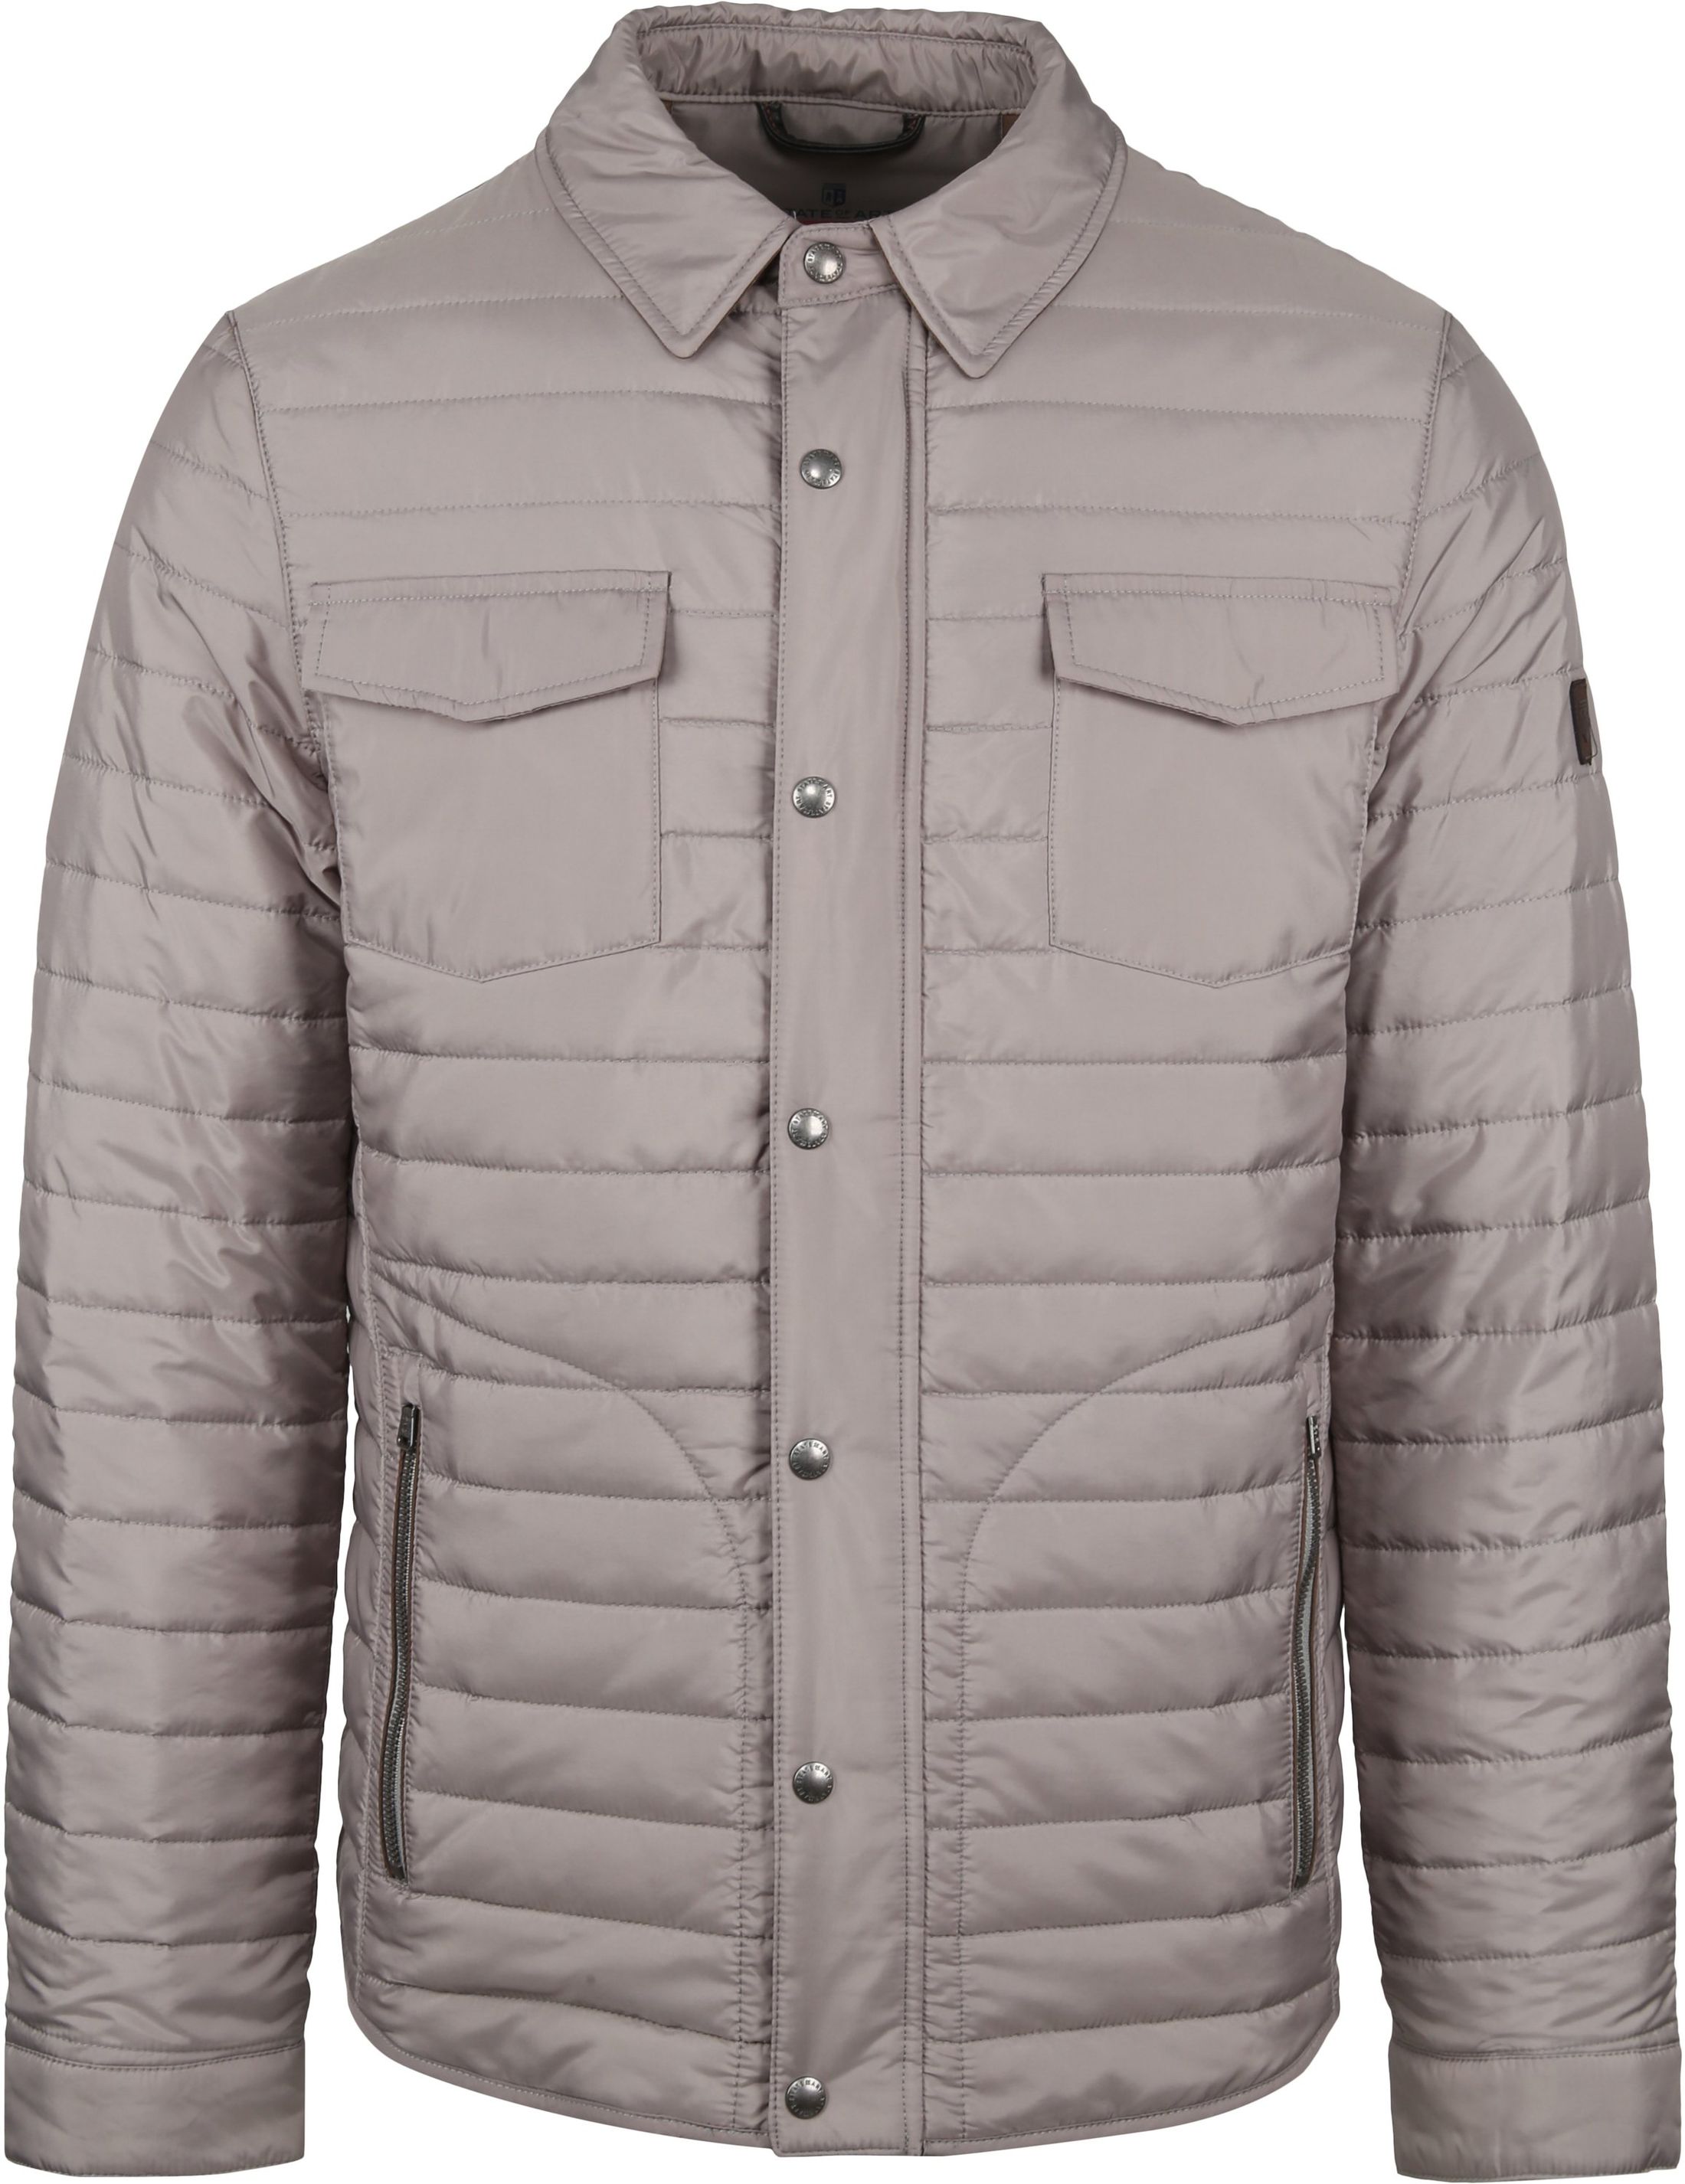 State Of Art Jacket Khaki Grey Green size 38-R